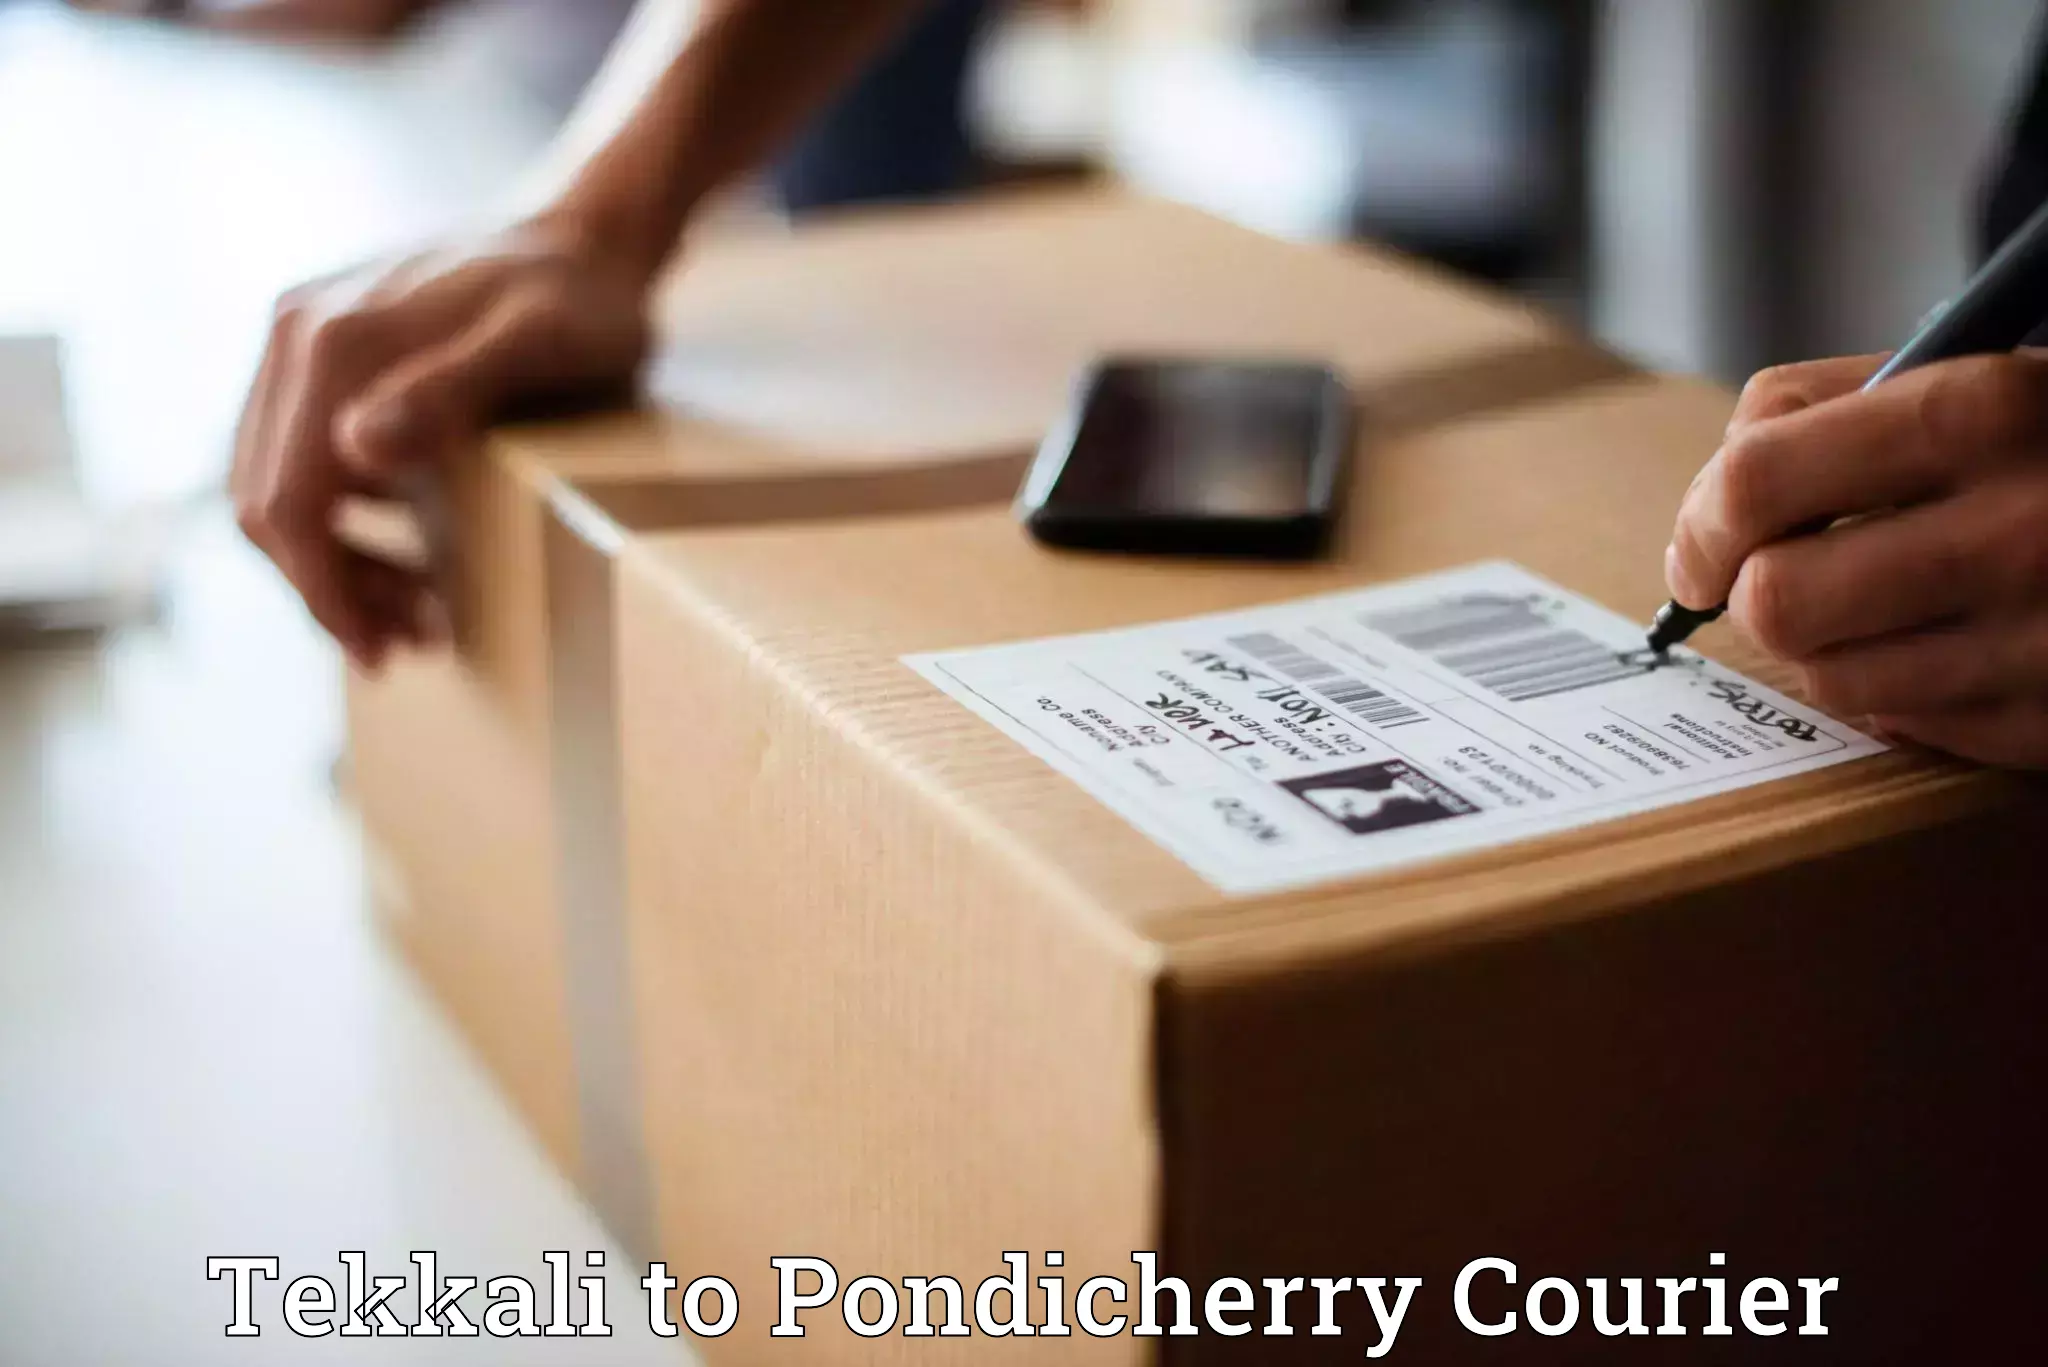 Logistics service provider Tekkali to Pondicherry